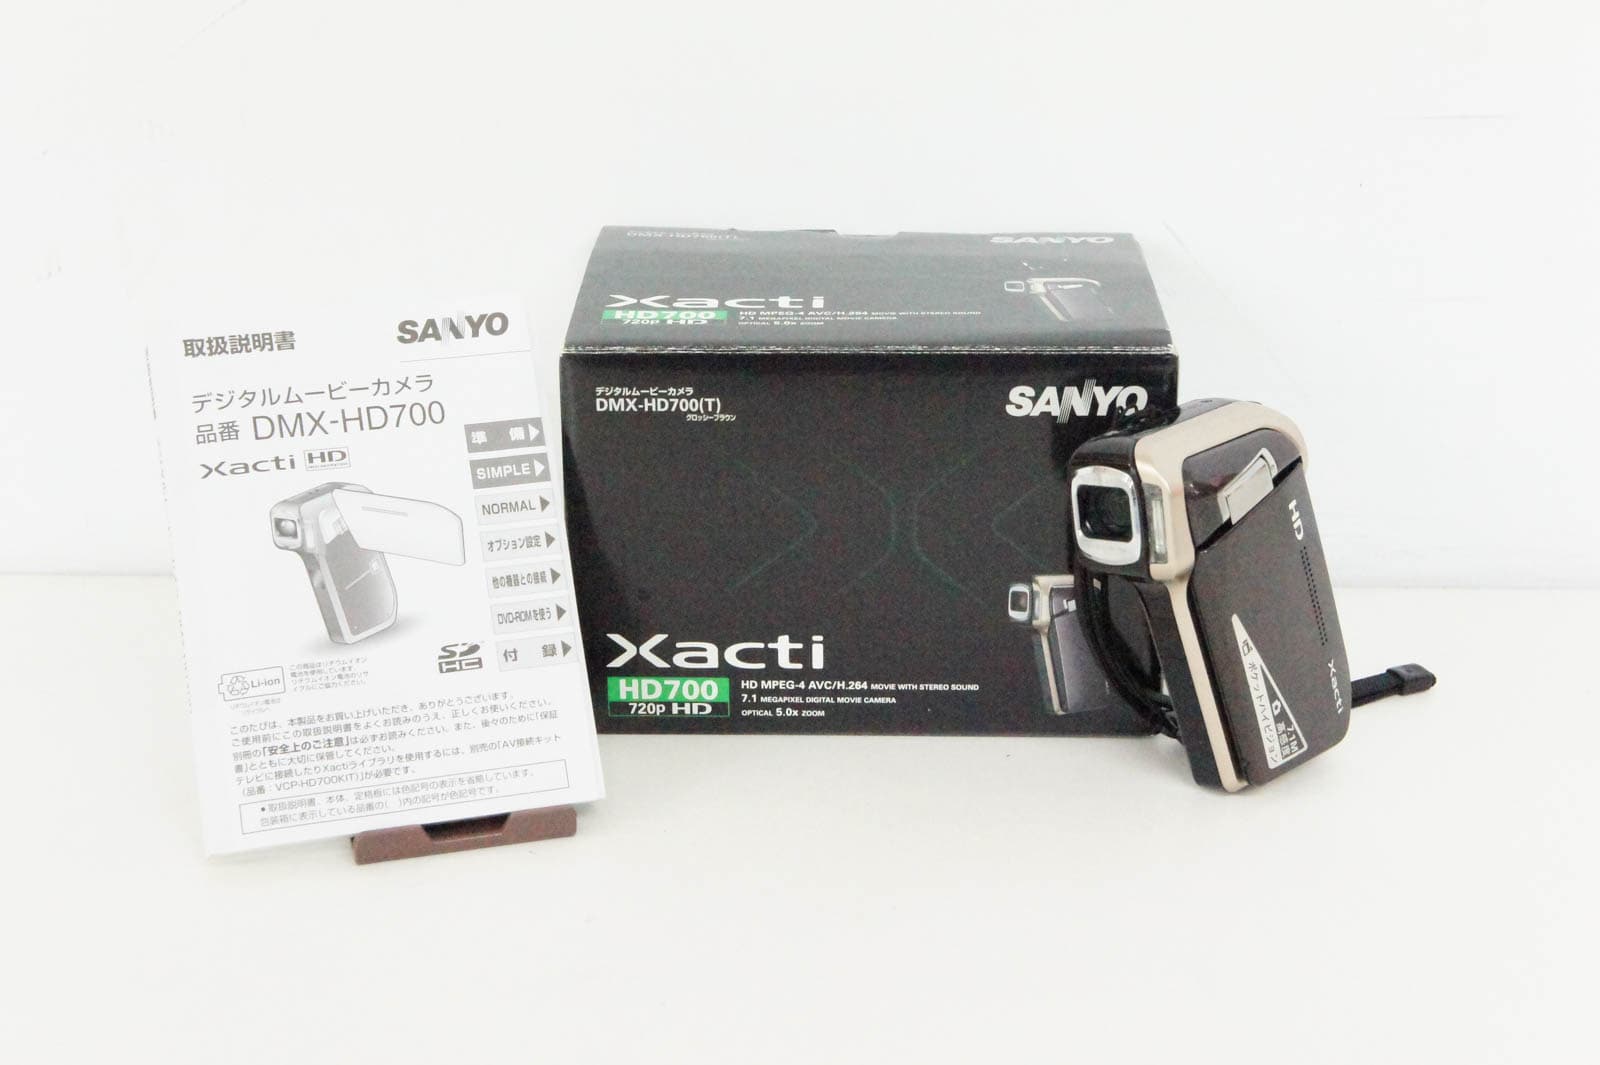 SANYO Xacti DMX-HD700 ブラウン AV接続キット付き - ビデオカメラ